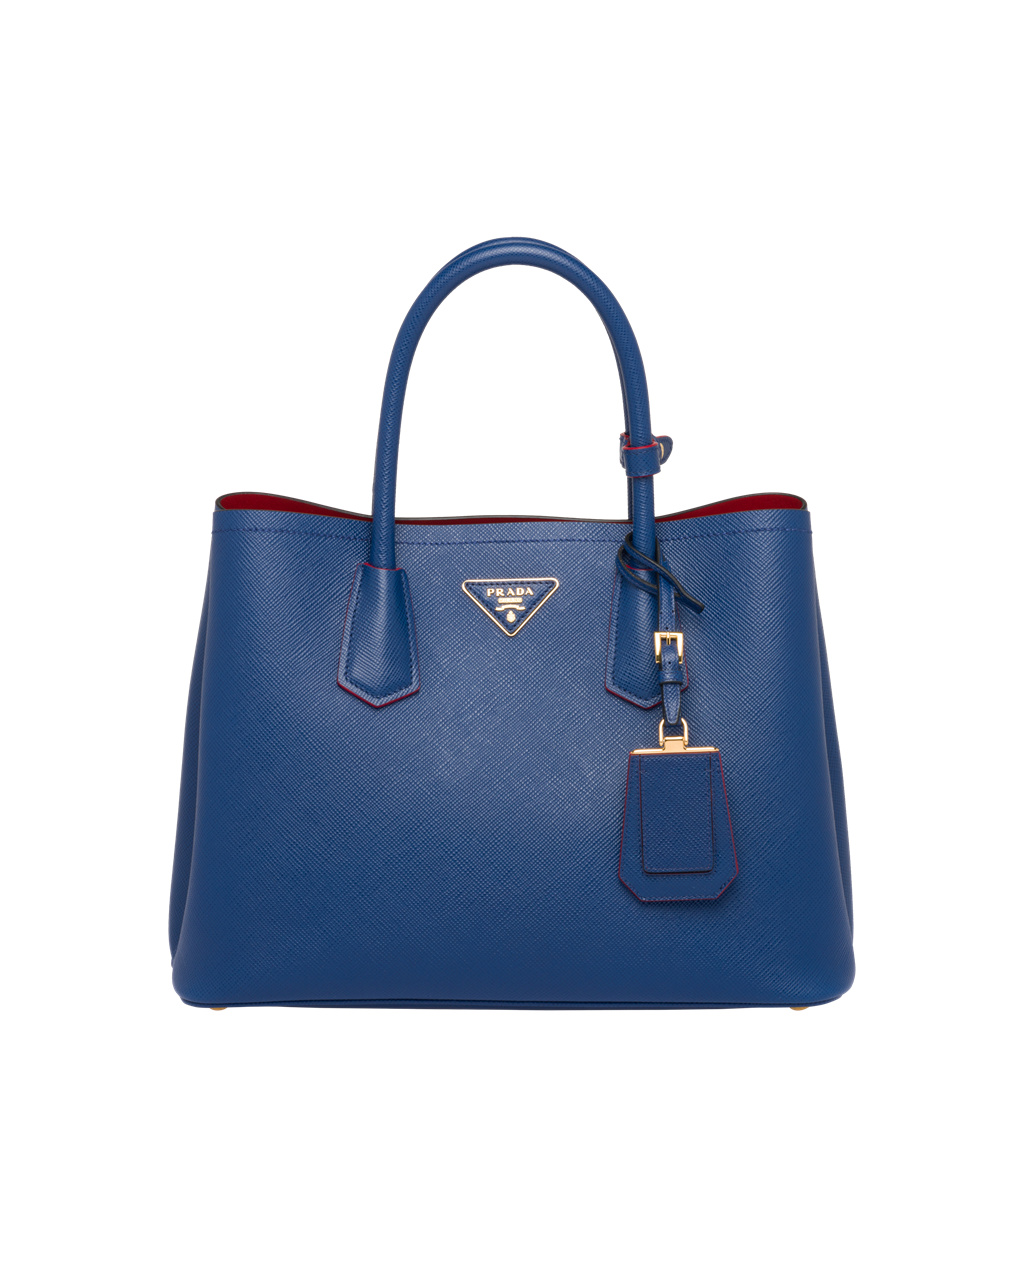 Prada Medium Saffiano Leather Double Prada Bag Bright Blue / Fiery Red | 2146UKTIQ